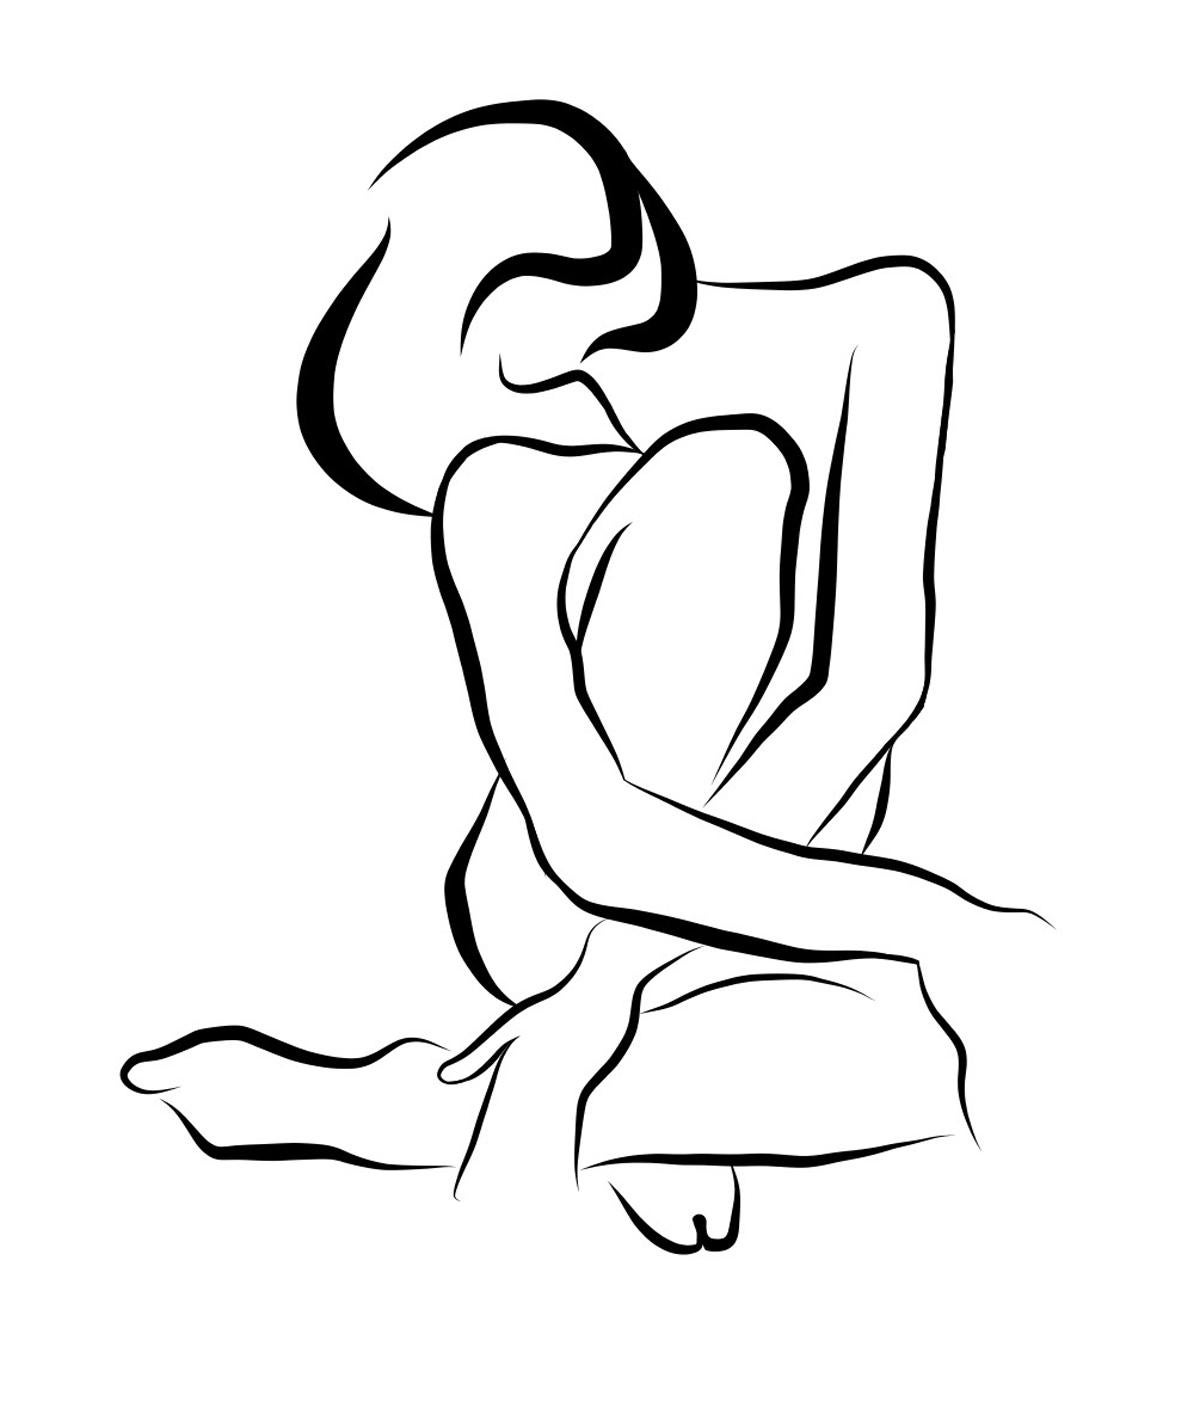 Michael Binkley Nude Print - Haiku #19 - Digital Vector Drawing B&W Seated Female Nude Woman Figure